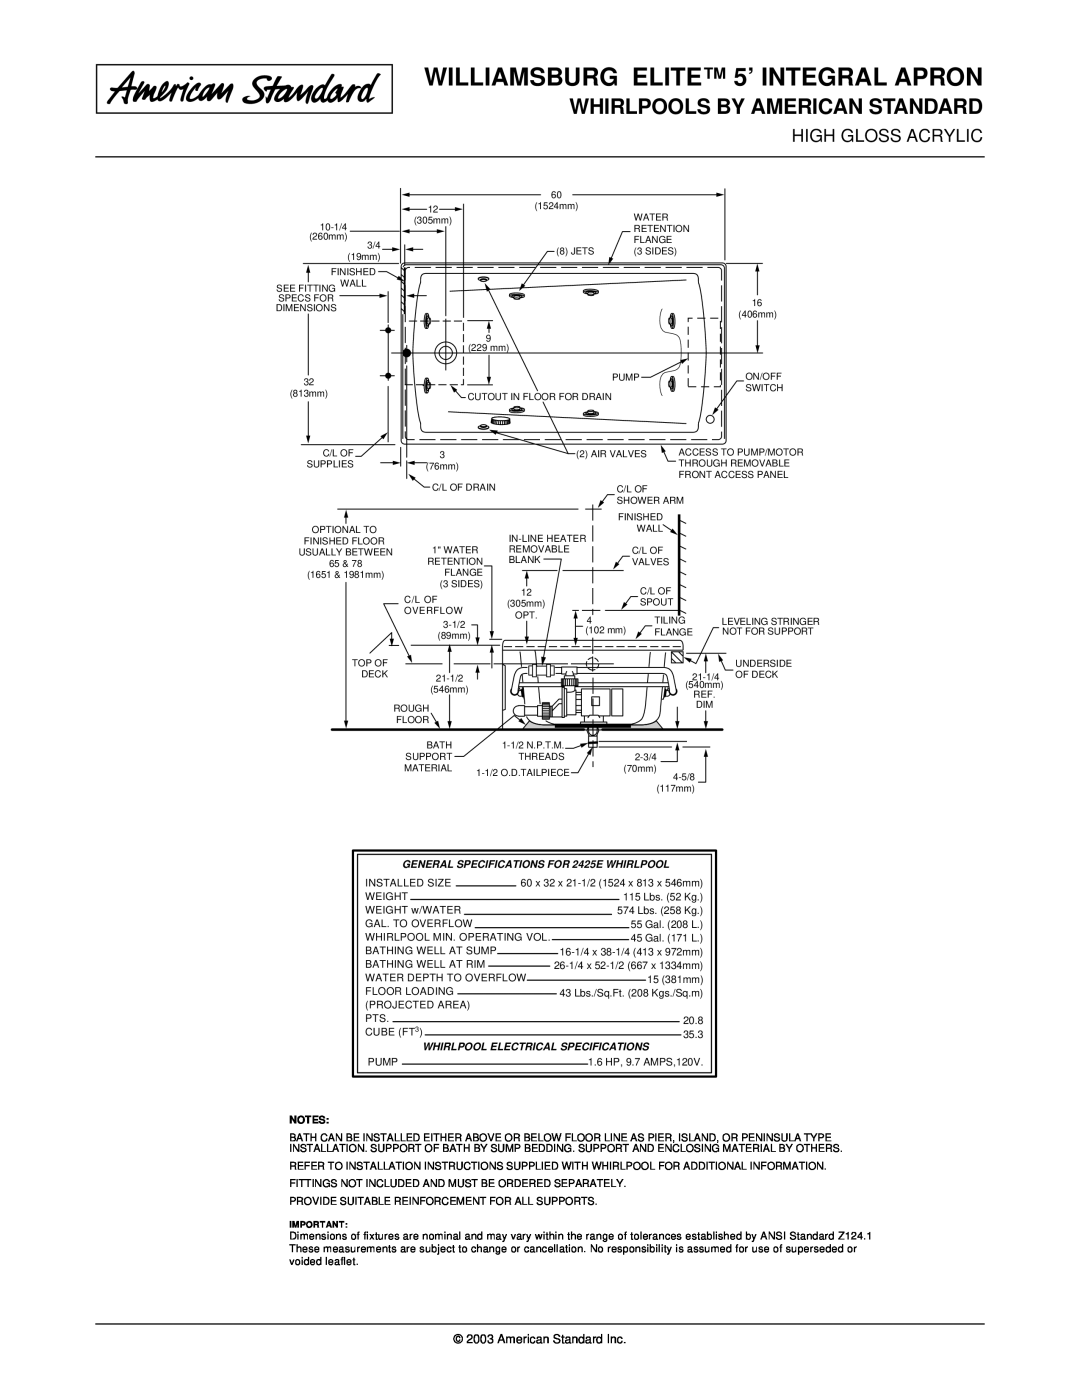 American Standard 2425EC-RHO WILLIAMSBURG ELITE 5’ INTEGRAL APRON, Whirlpools By American Standard, American Standard Inc 